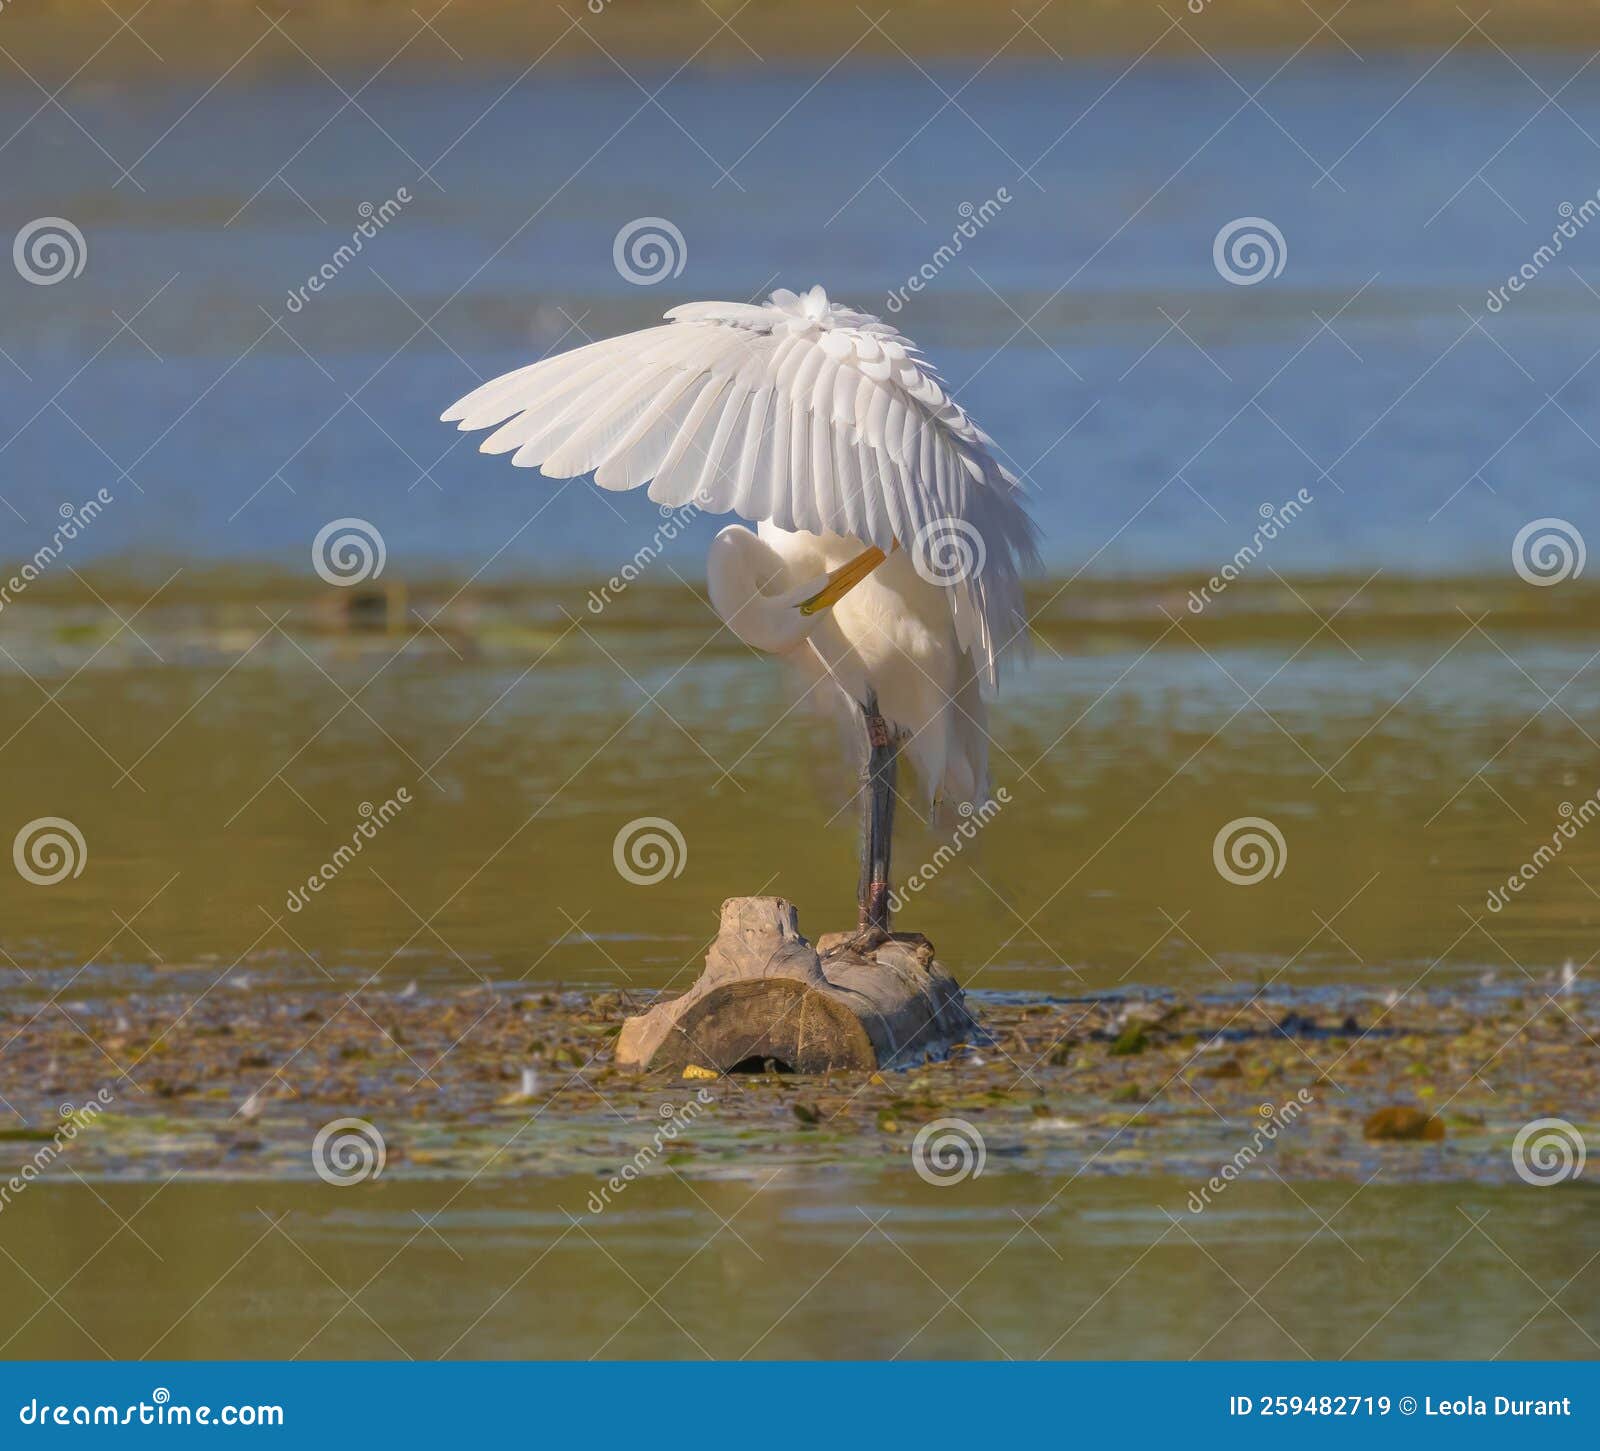 Great Egret Looking Elegant while Preening Stock Image - Image of swan ...